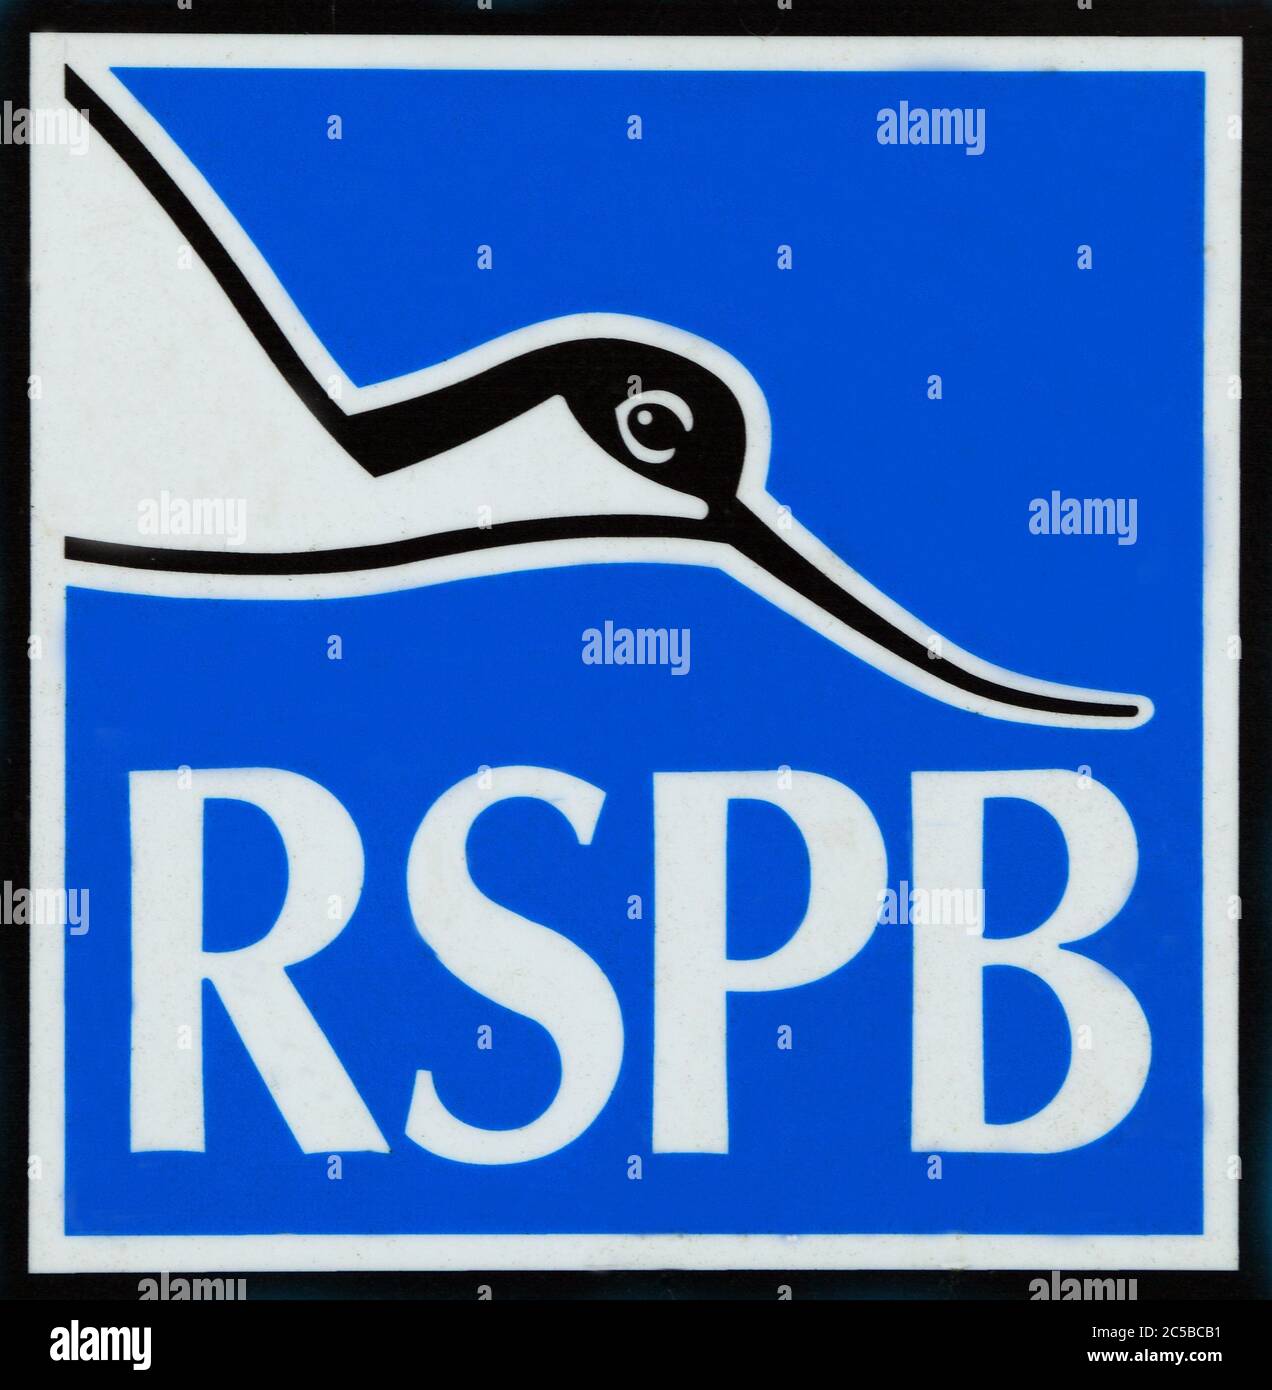 RSPB, logo, signe, Snettisham, Norfolk, Angleterre Banque D'Images